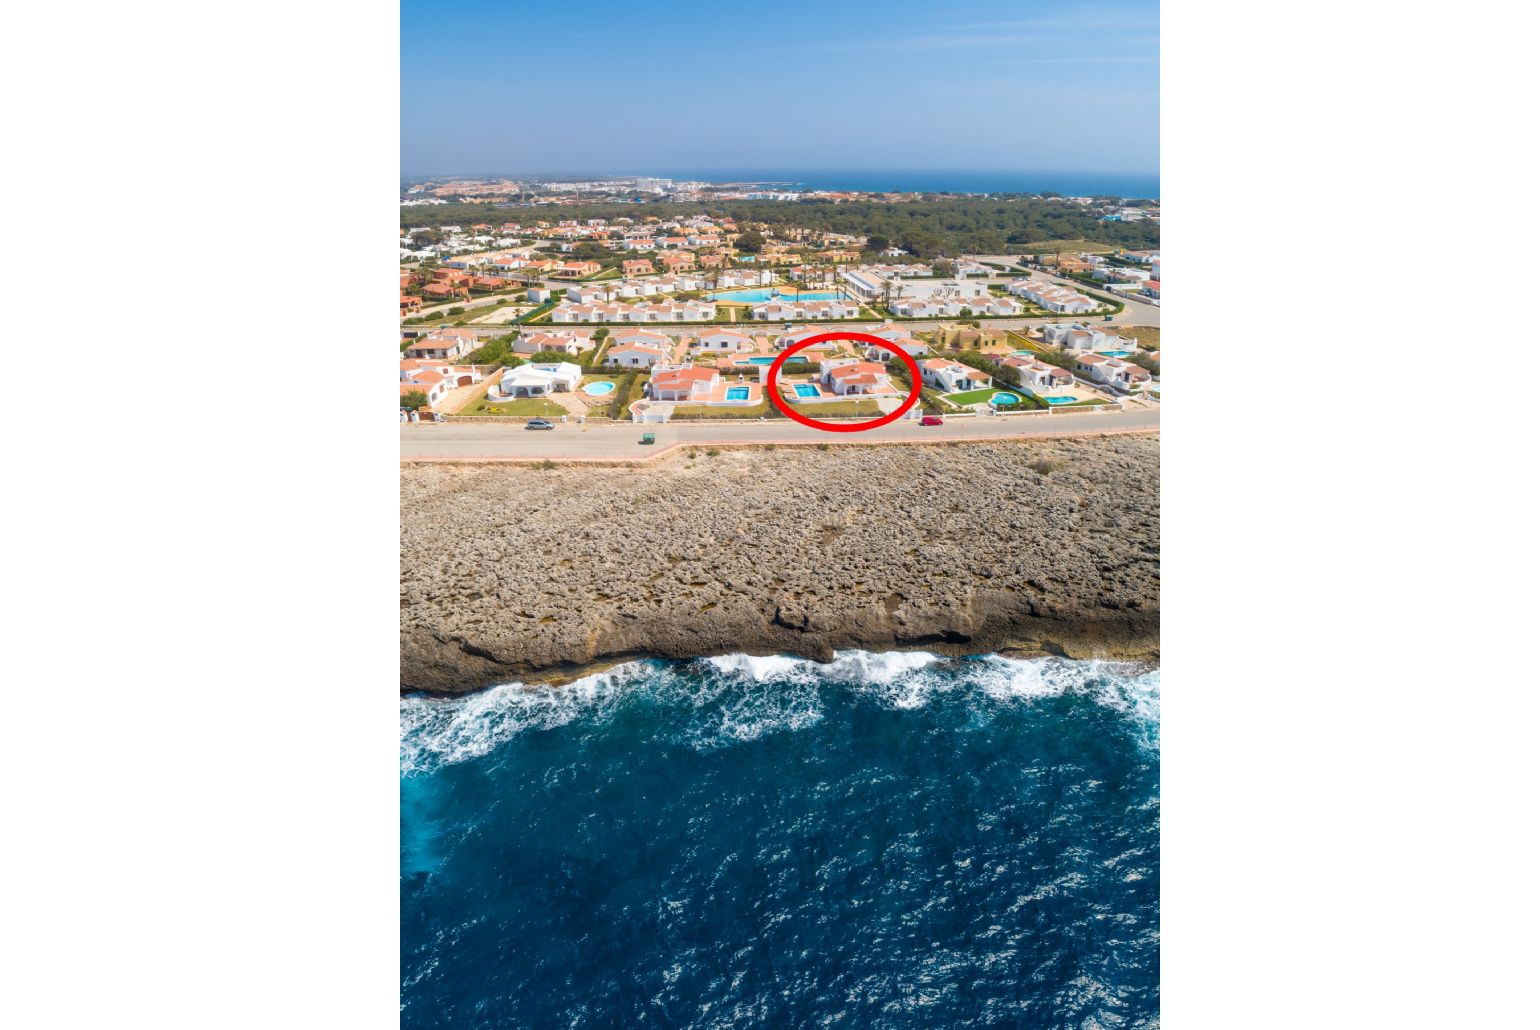 Aerial view showing location of Villa Mar